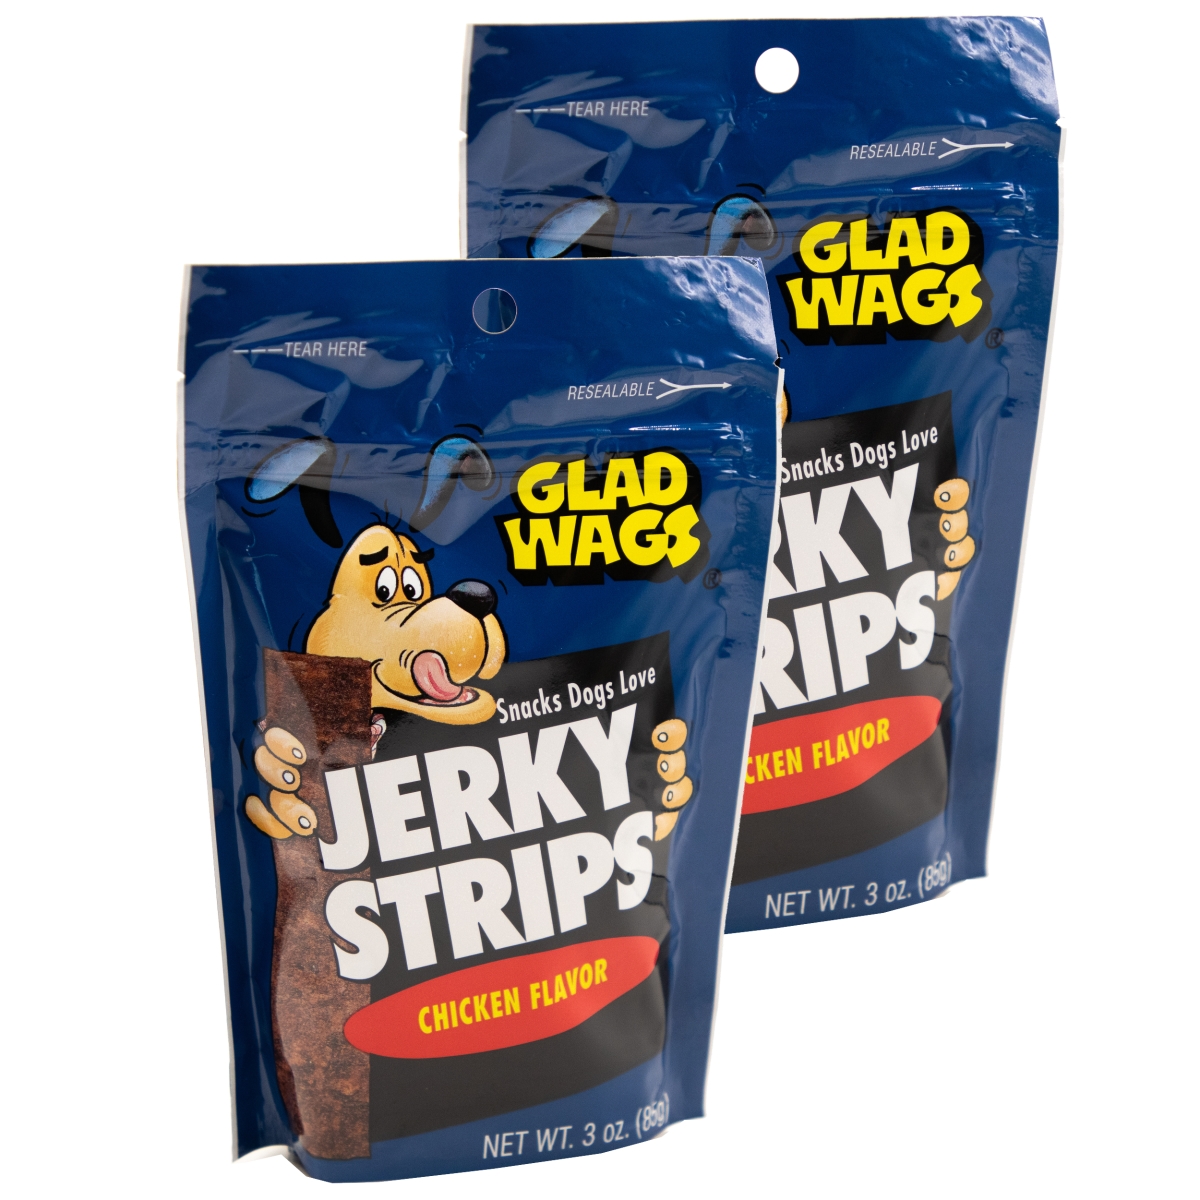 192959809947 3 Oz Chicken Flavor Jerky Strips - Pack Of 2